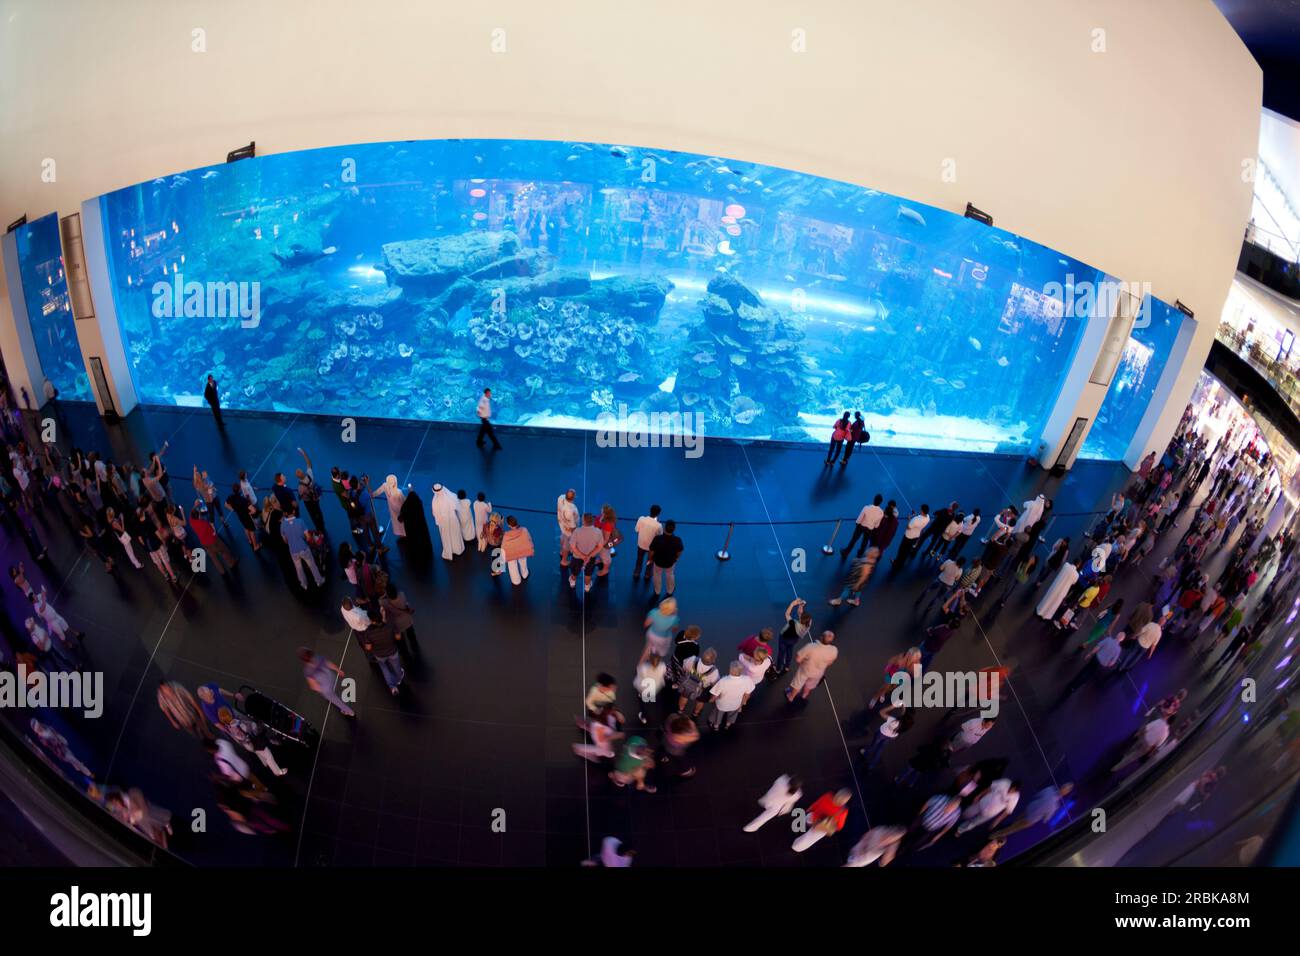 Dubai aquarium mall hi-res stock photography and images - Alamy